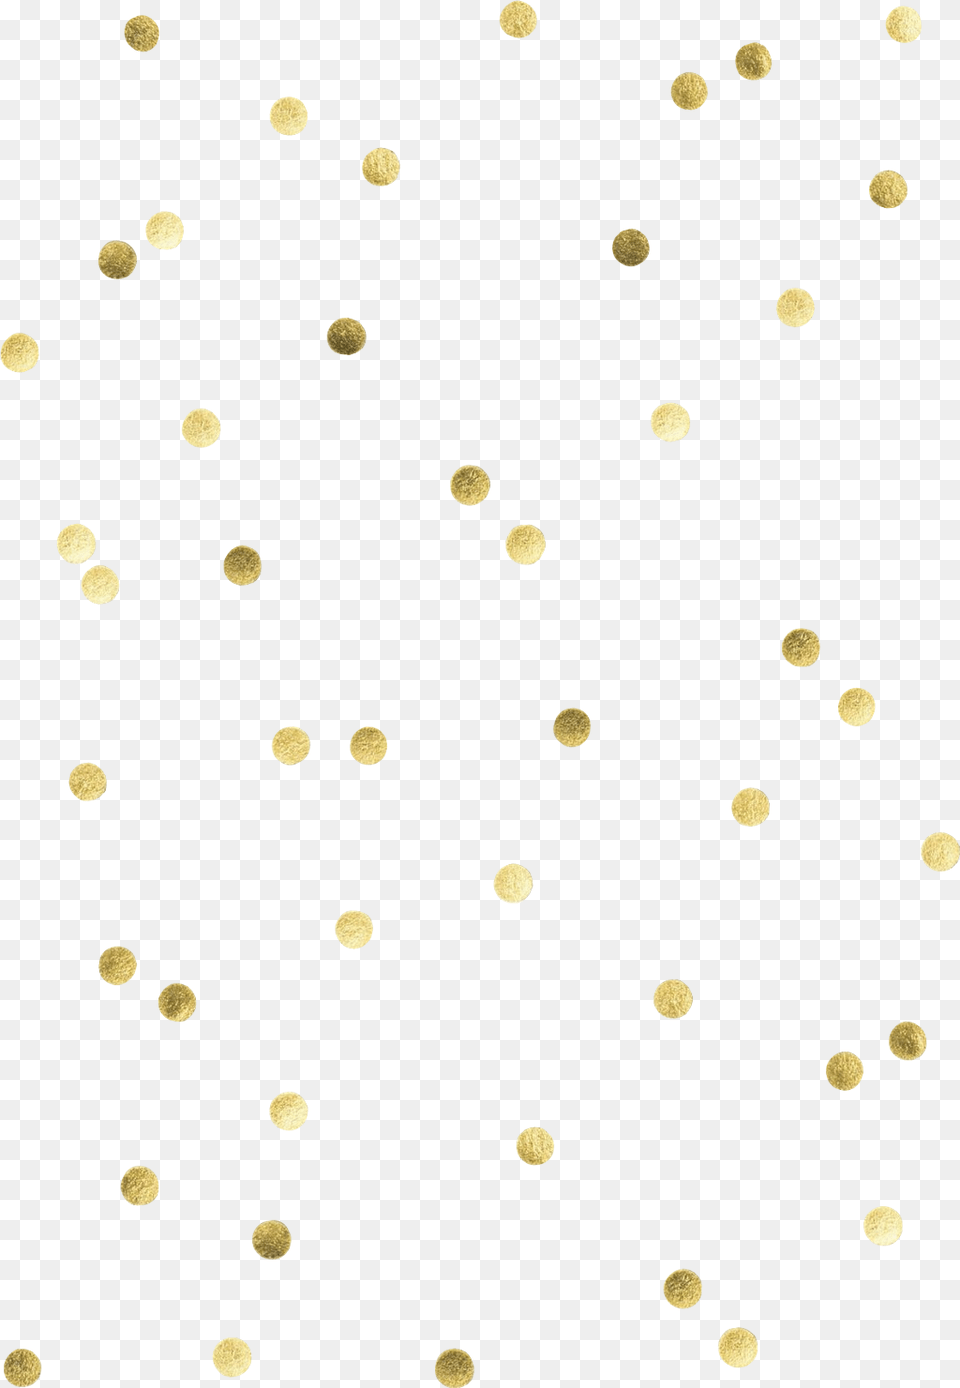 Gold Glitter Confetti Jpg Download Gold Glitter Confetti Transparent, Pattern, Paper, Polka Dot Png